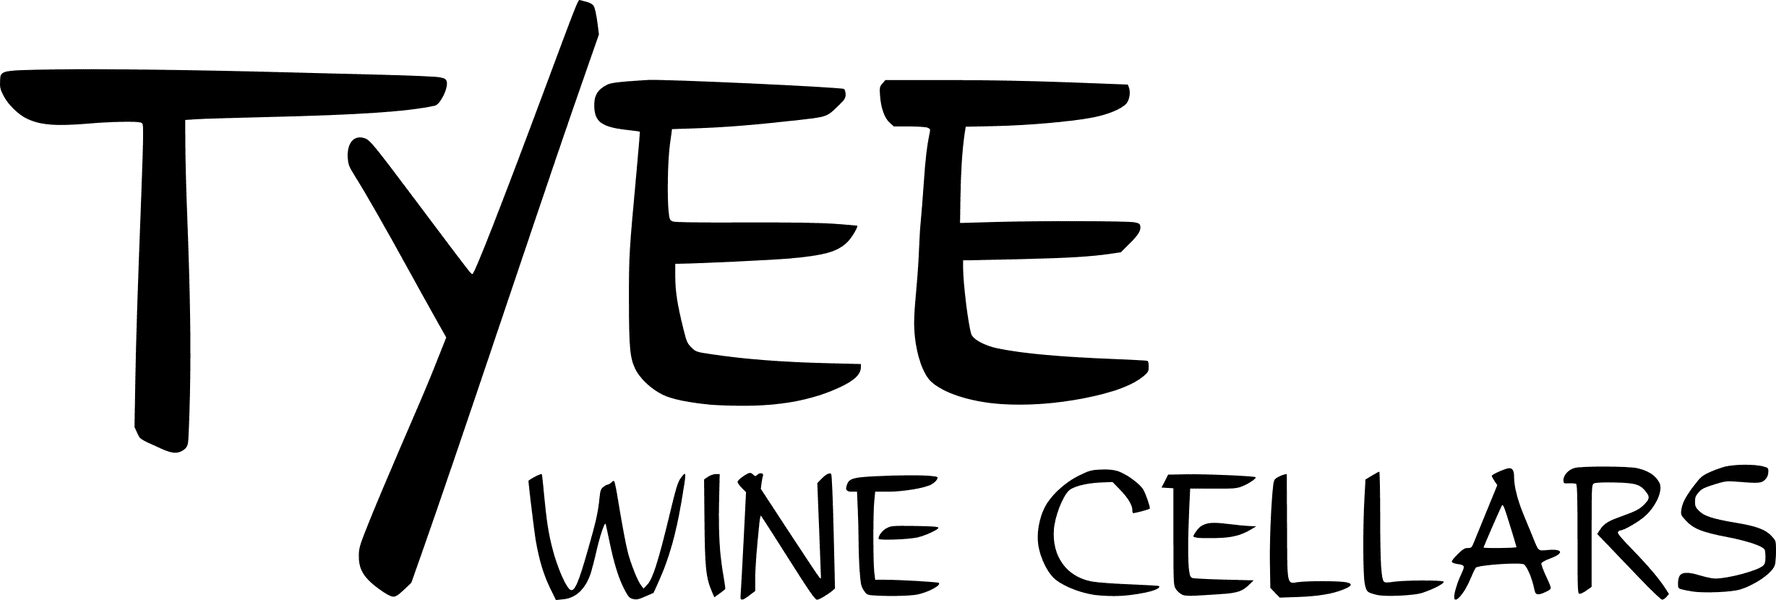 Logo for Tyee Wine Cellars